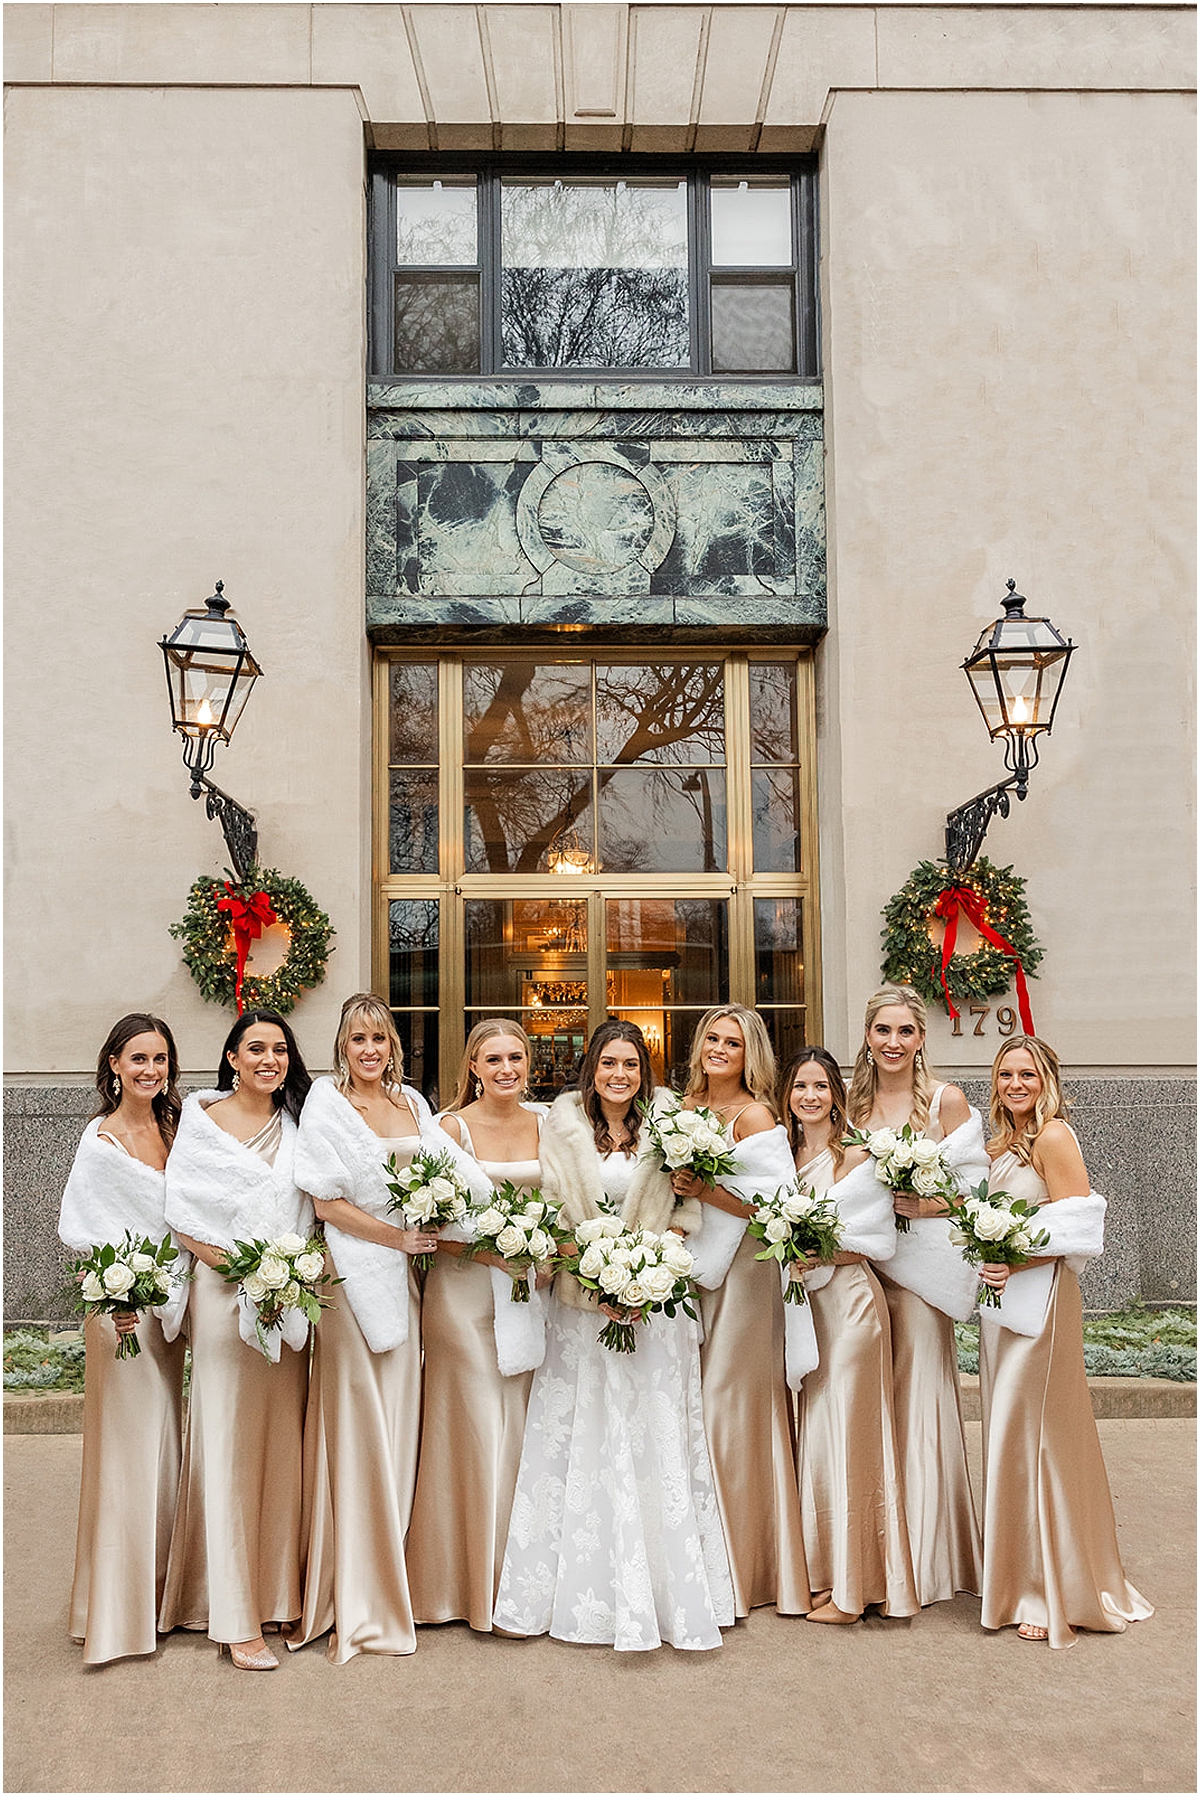 bridesmaids in champagne dresses surround the bride